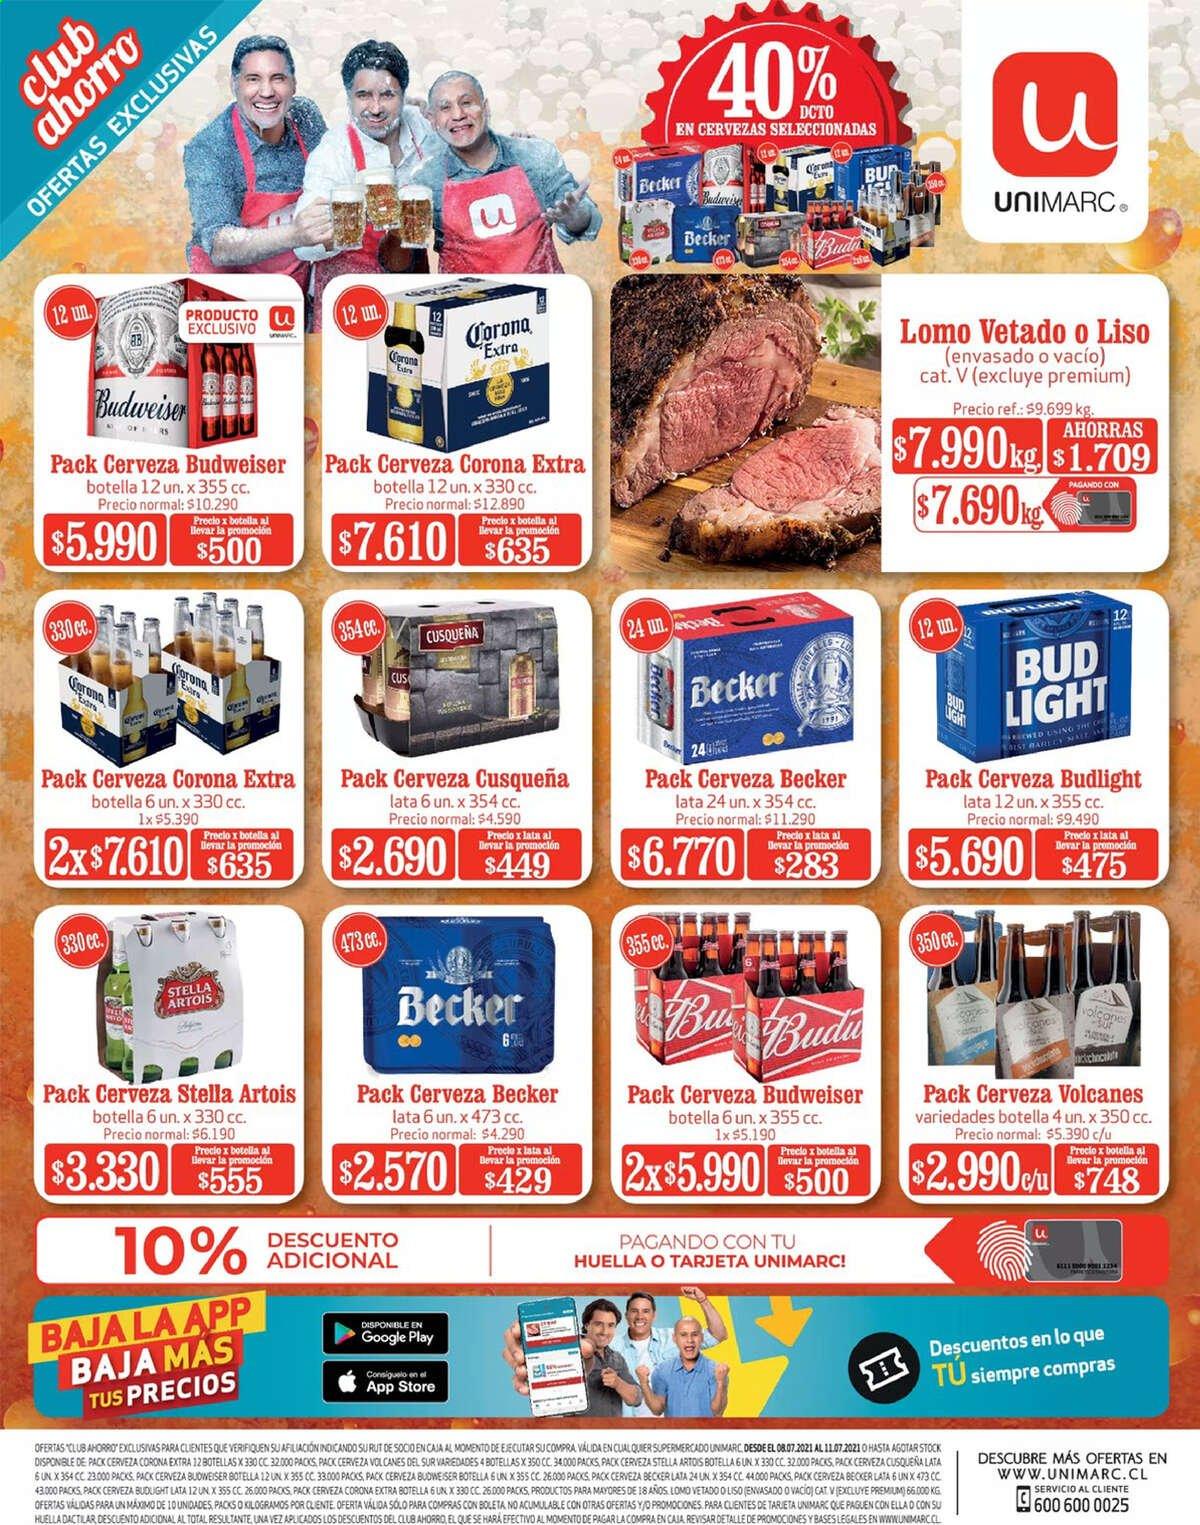 thumbnail - Catálogo Unimarc - 08.07.2021 - 11.07.2021 - Ventas - Budweiser, Stella Artois, Corona, cerveza, lomo. Página 1.